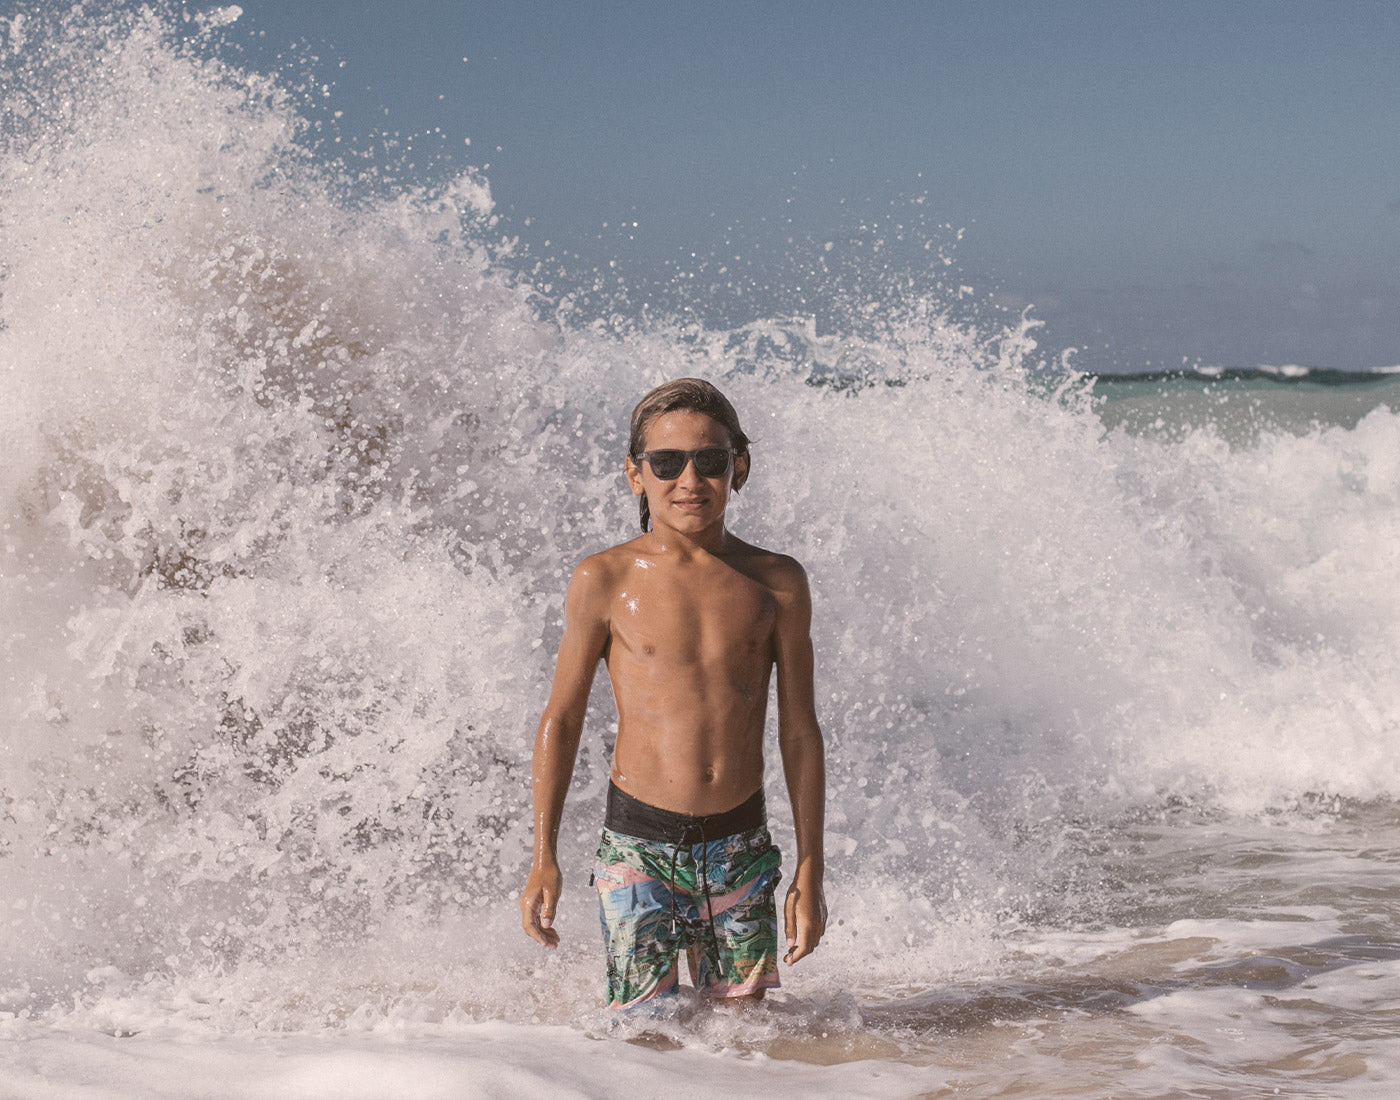 boy in the waves wearing sunski mini headland sunglasses